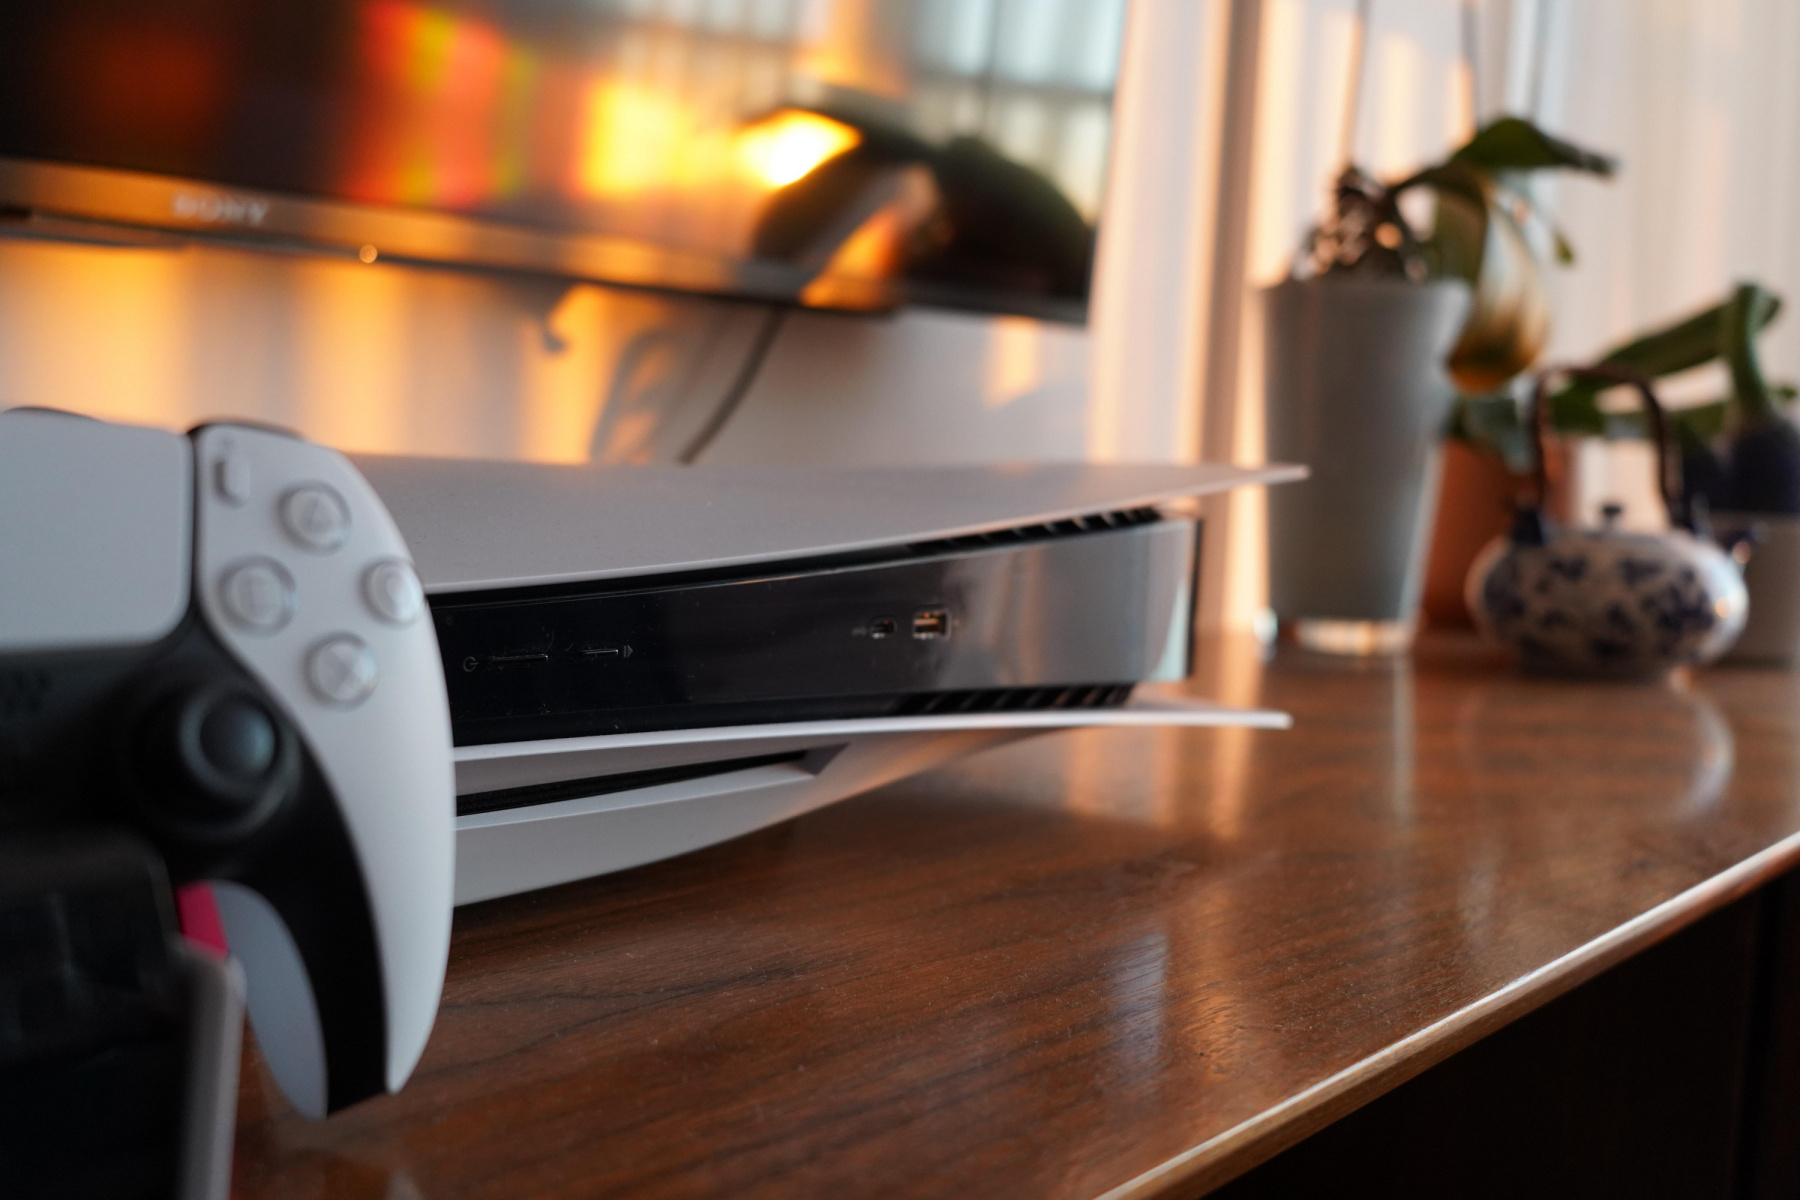 PlayStation Plus: Aumento de Capacidade de Armazenamento na Nuvem